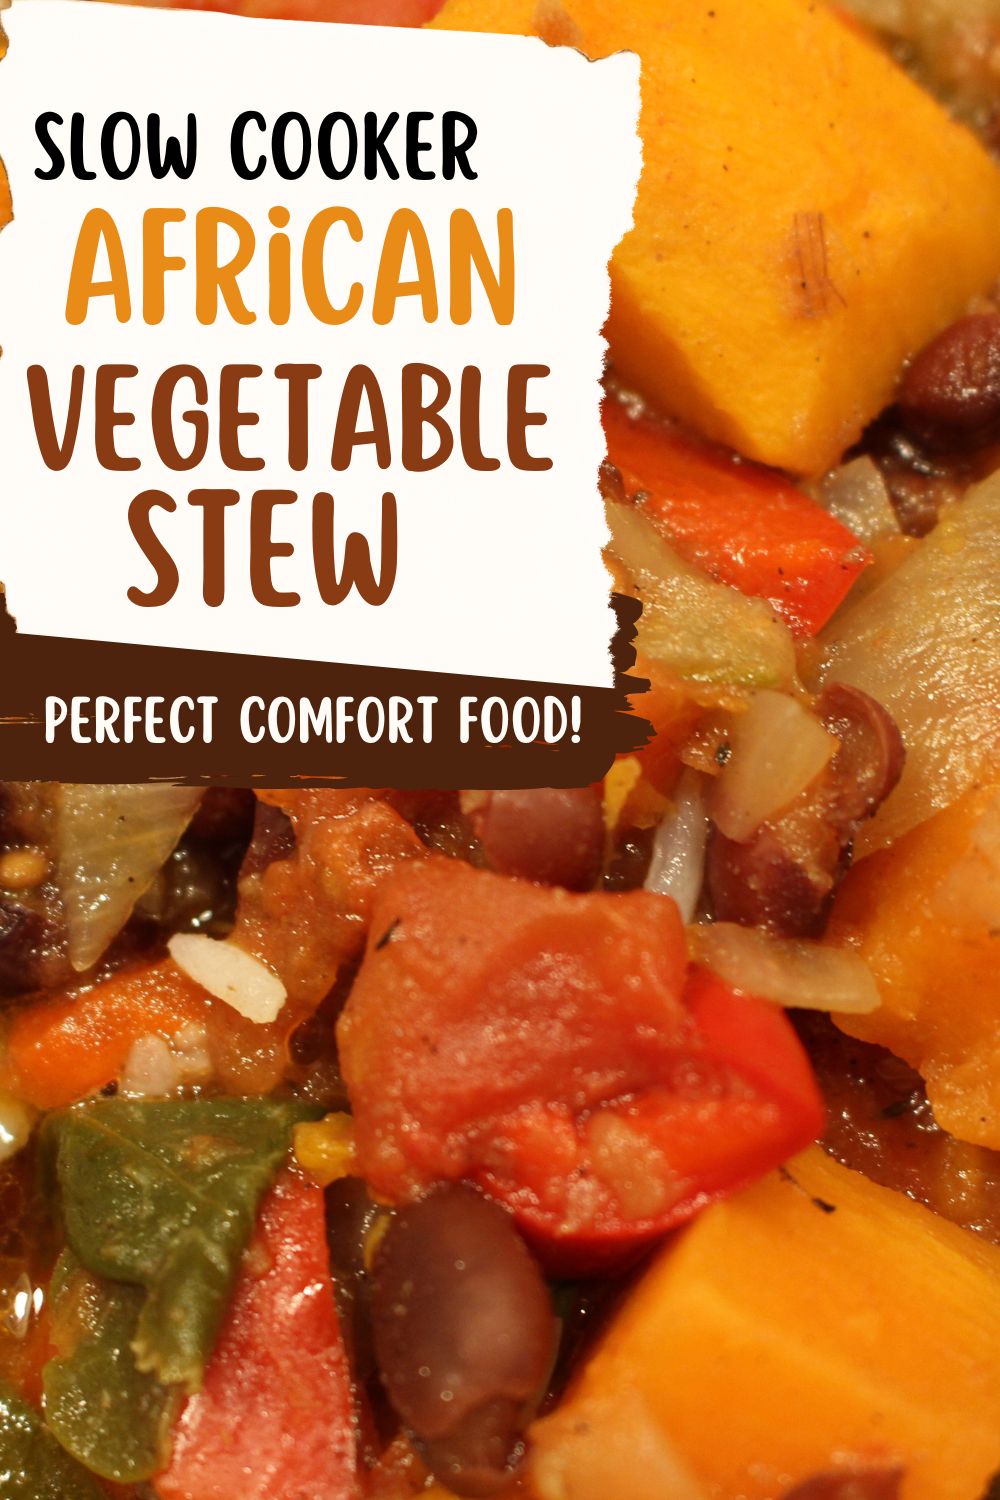 Slow cooker African vegetable stew: perfect comfort food.